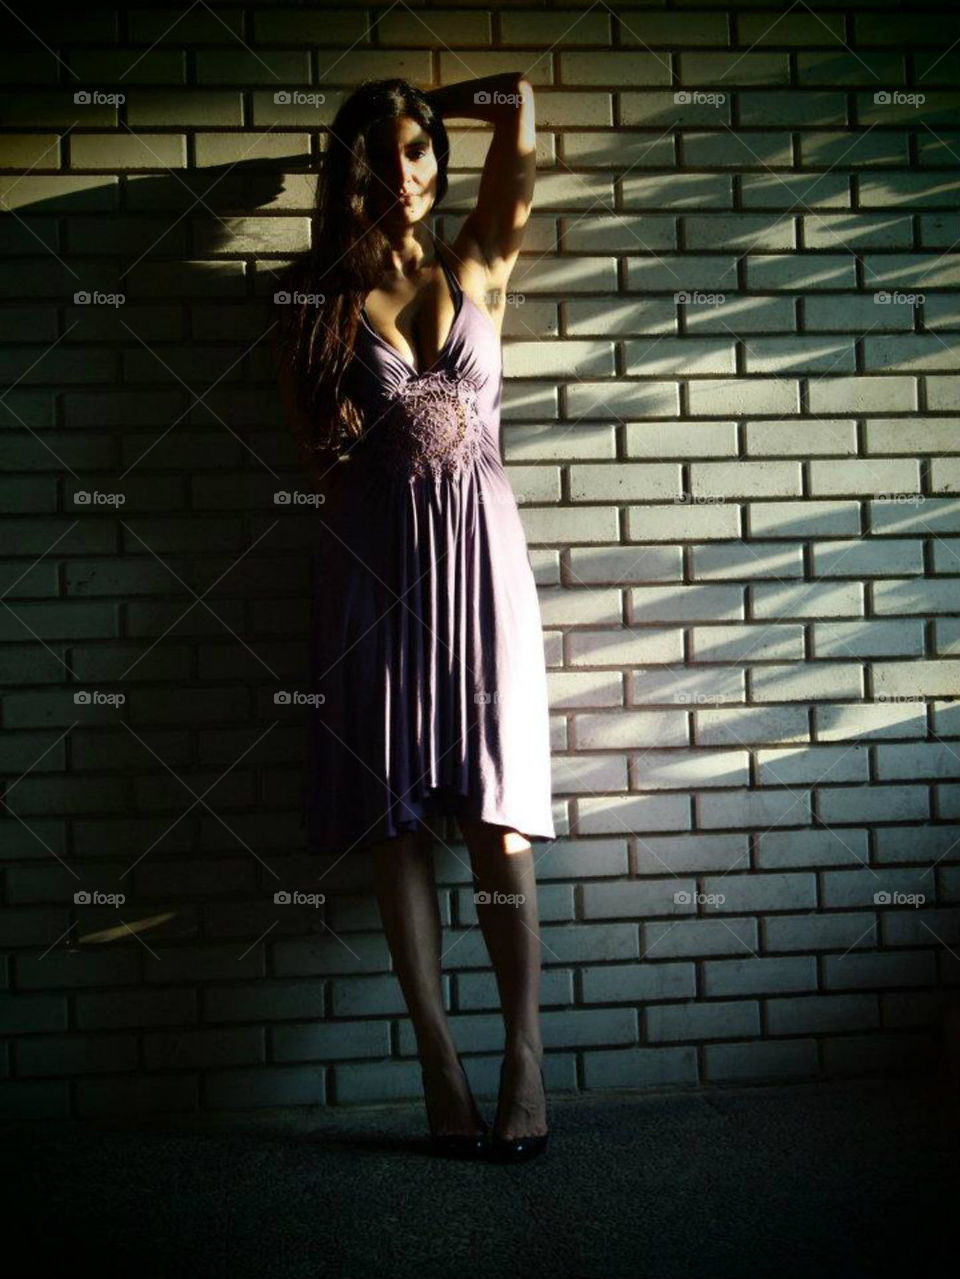 woman wall dress bricks by mikaela6212